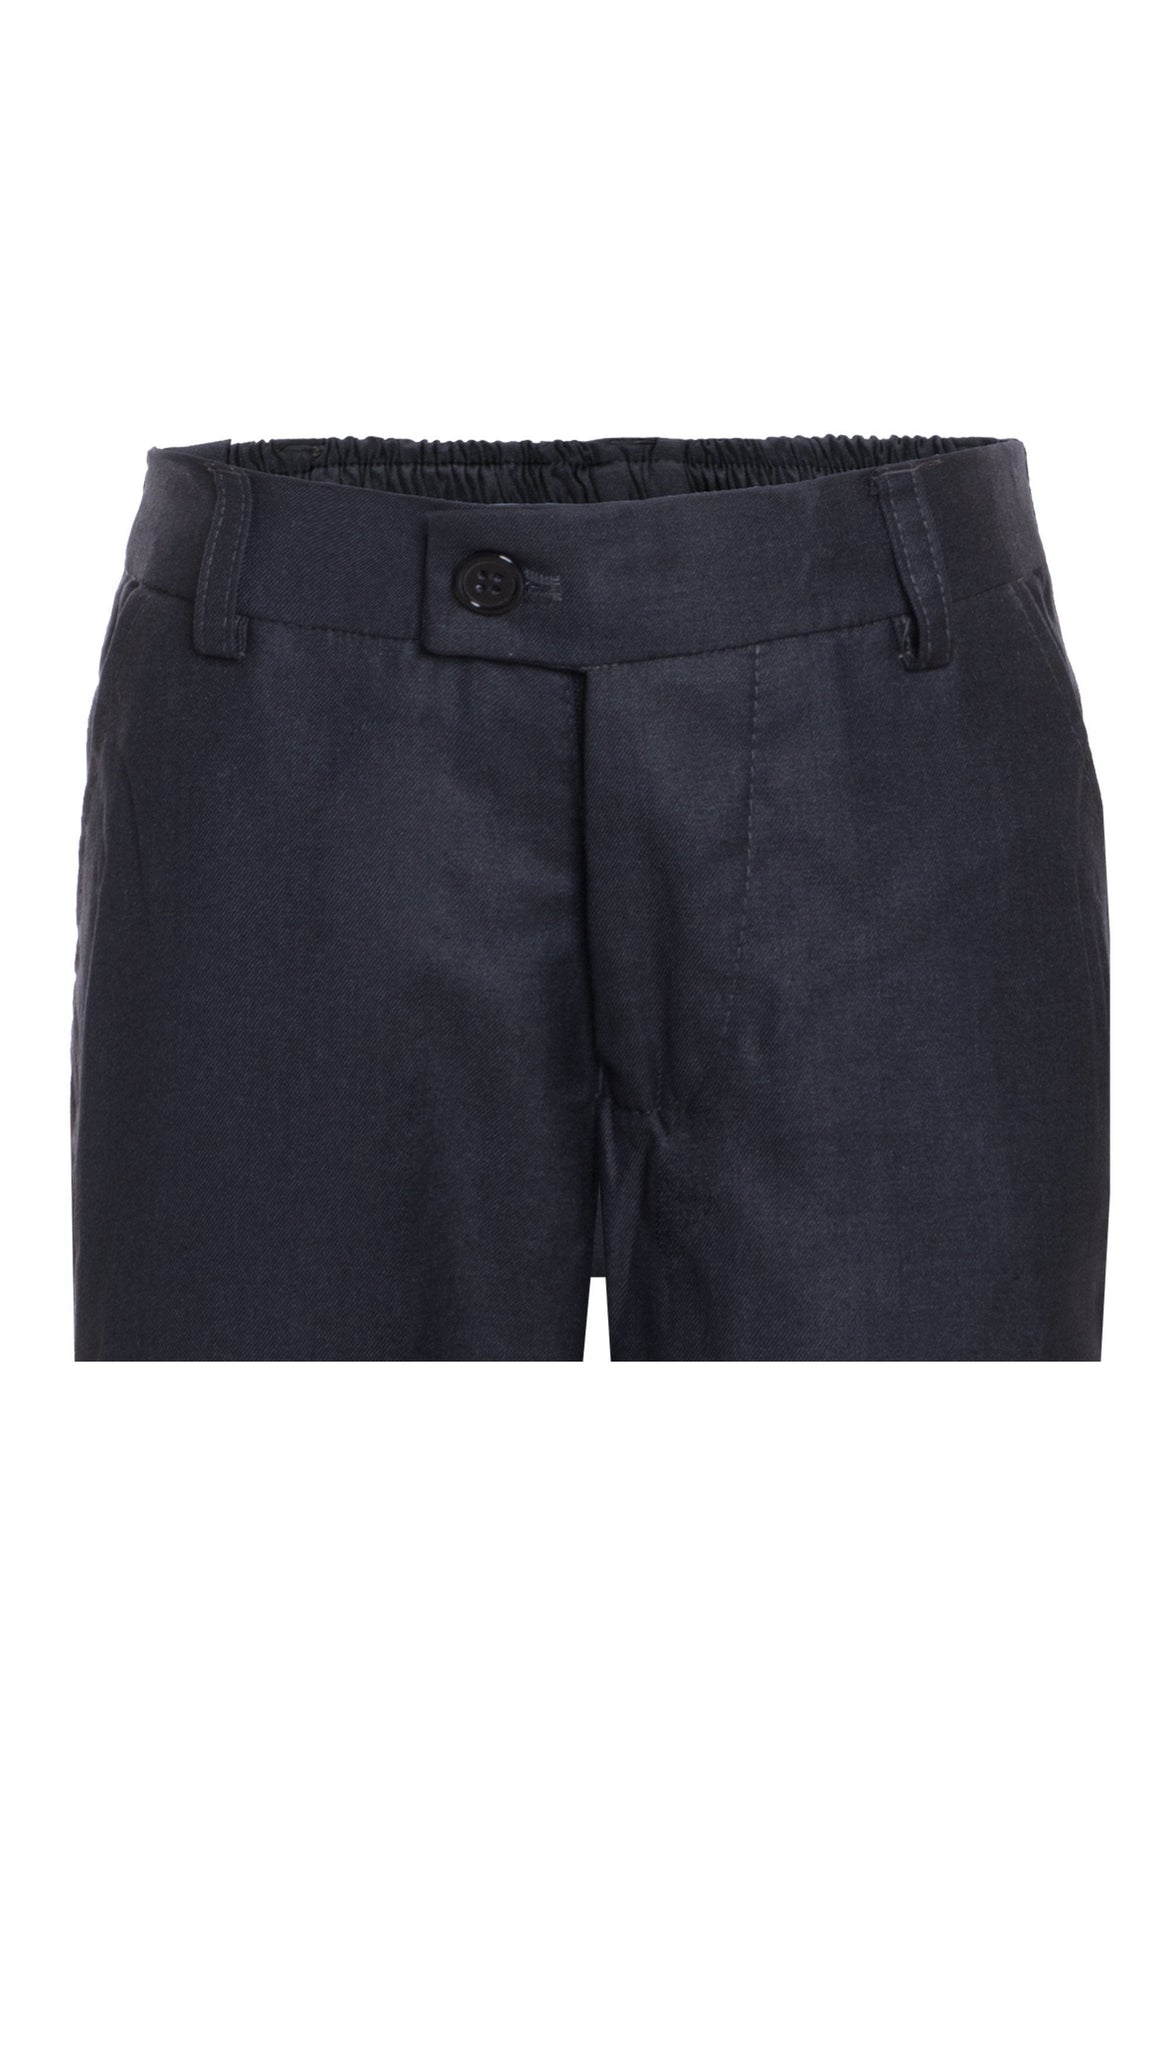 Ezra Charcoal Regular Fit Boys Dress Pants - Ferrecci USA 